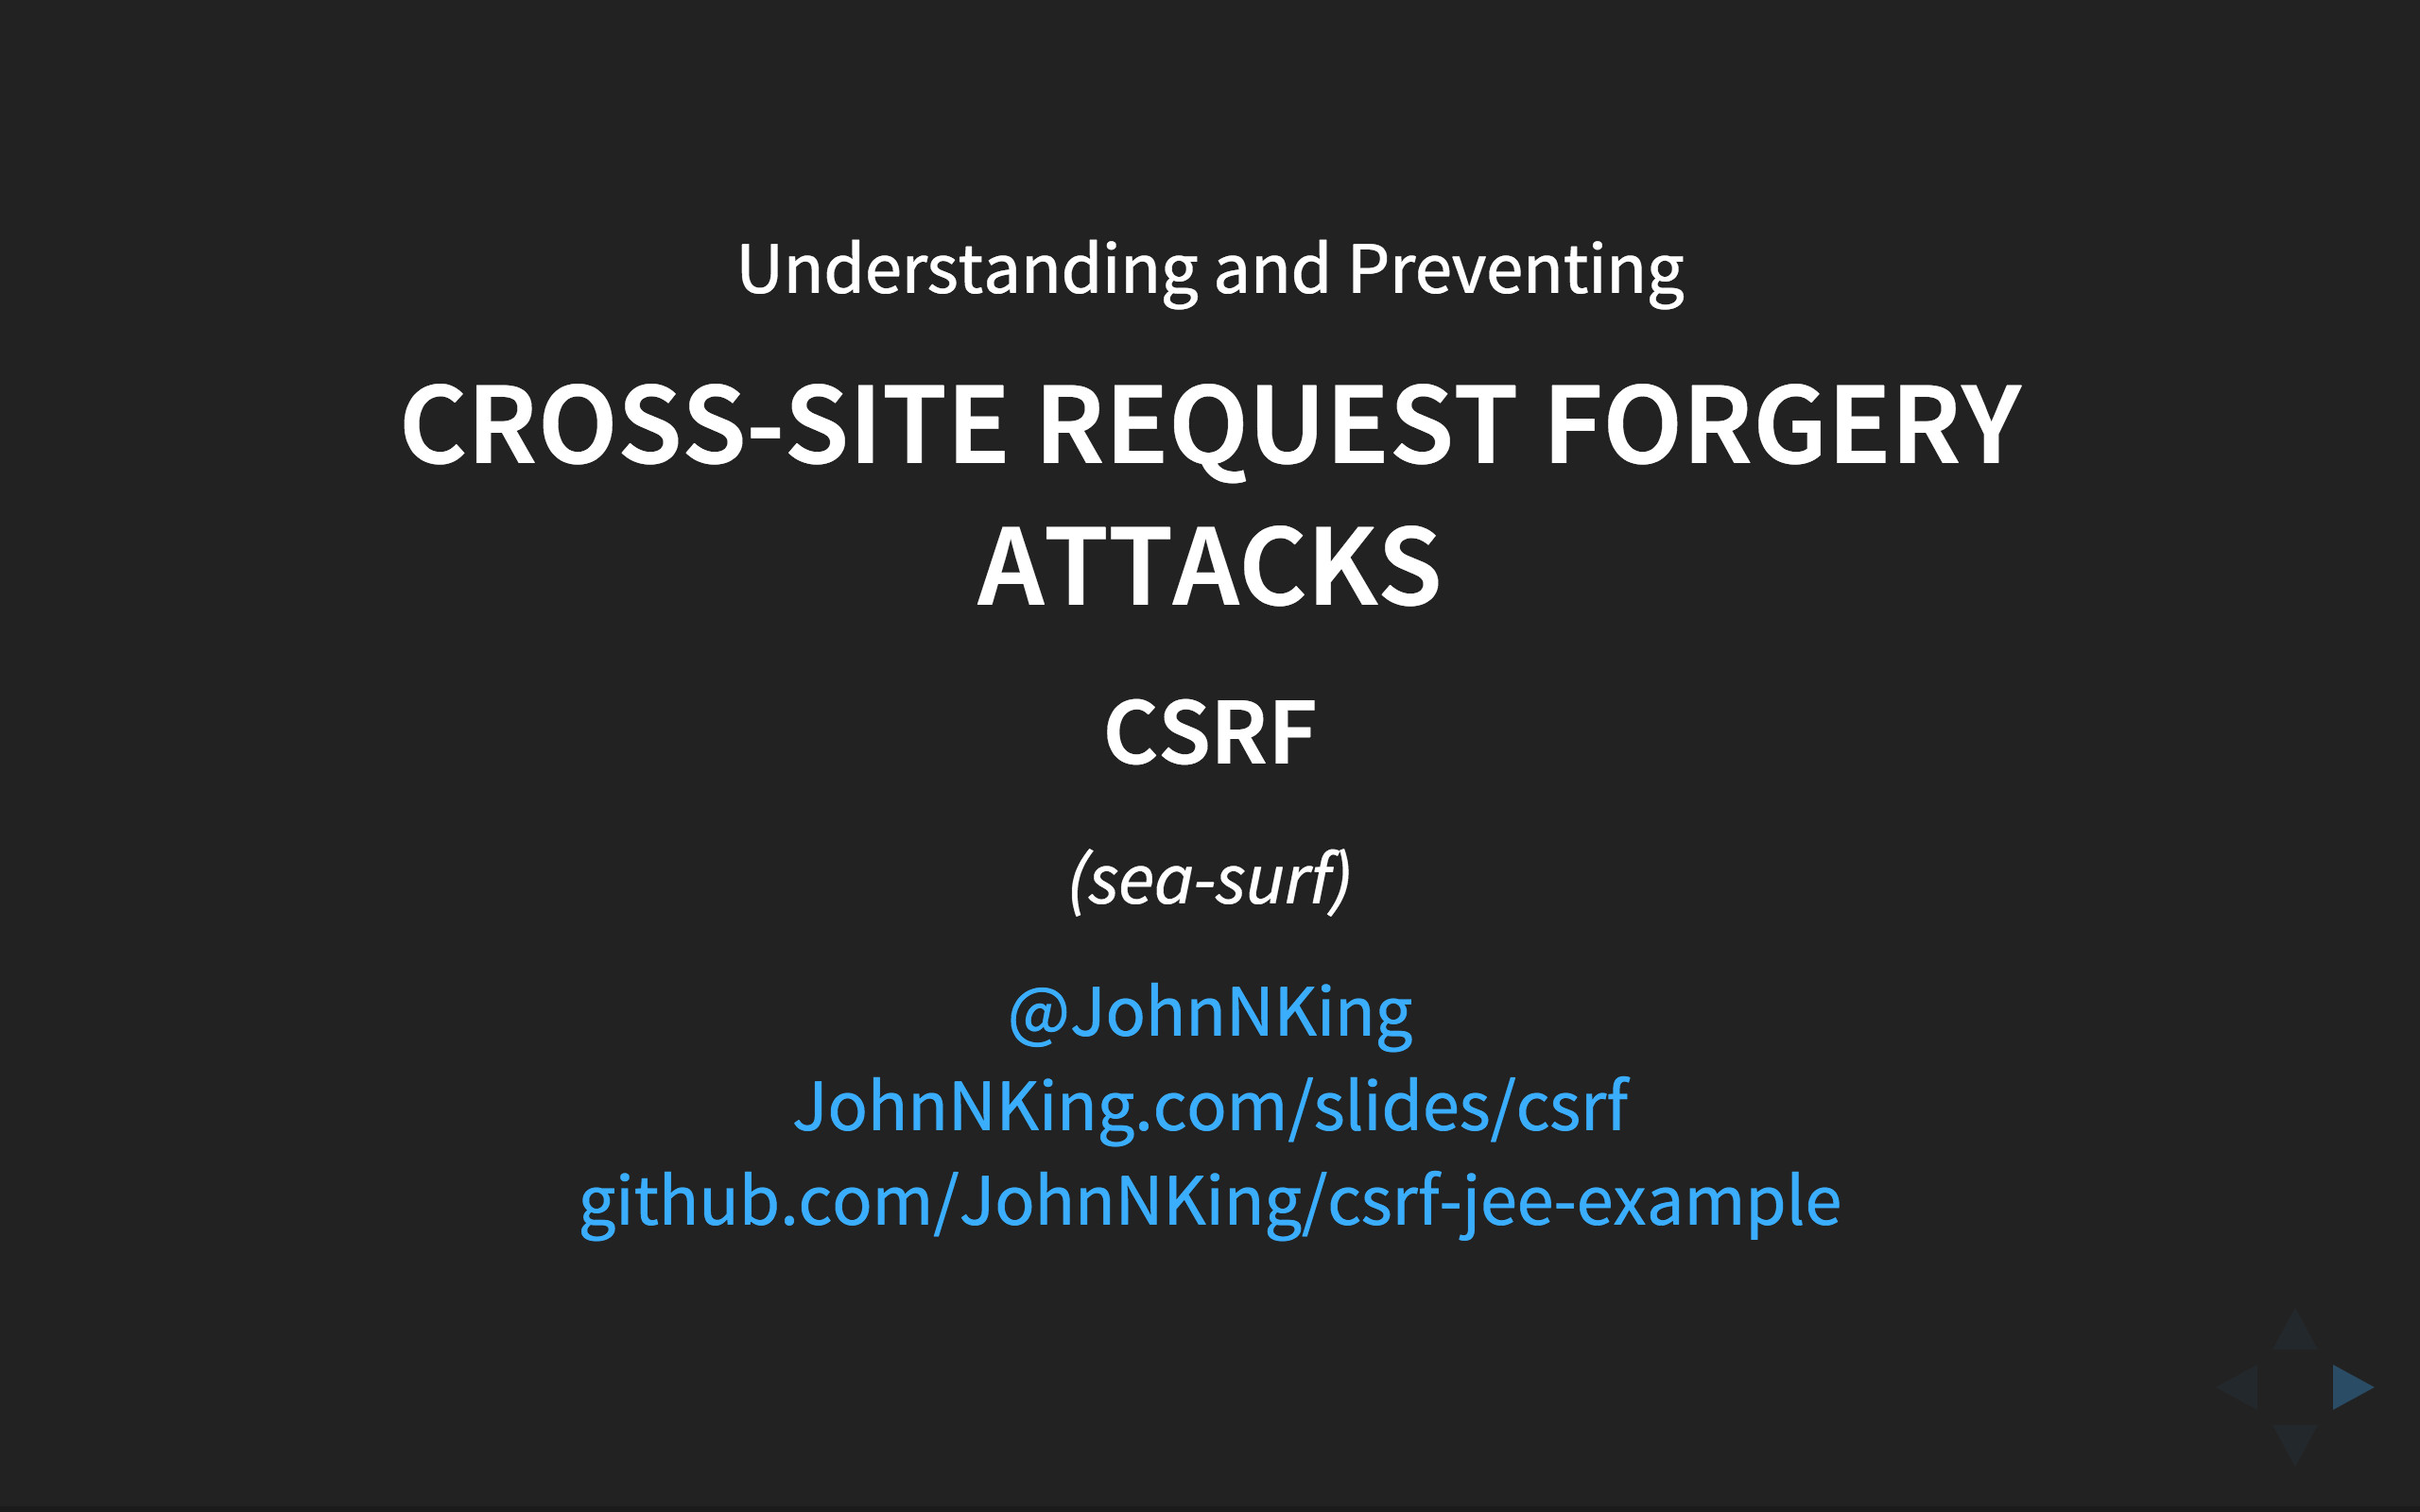 CSRF slides